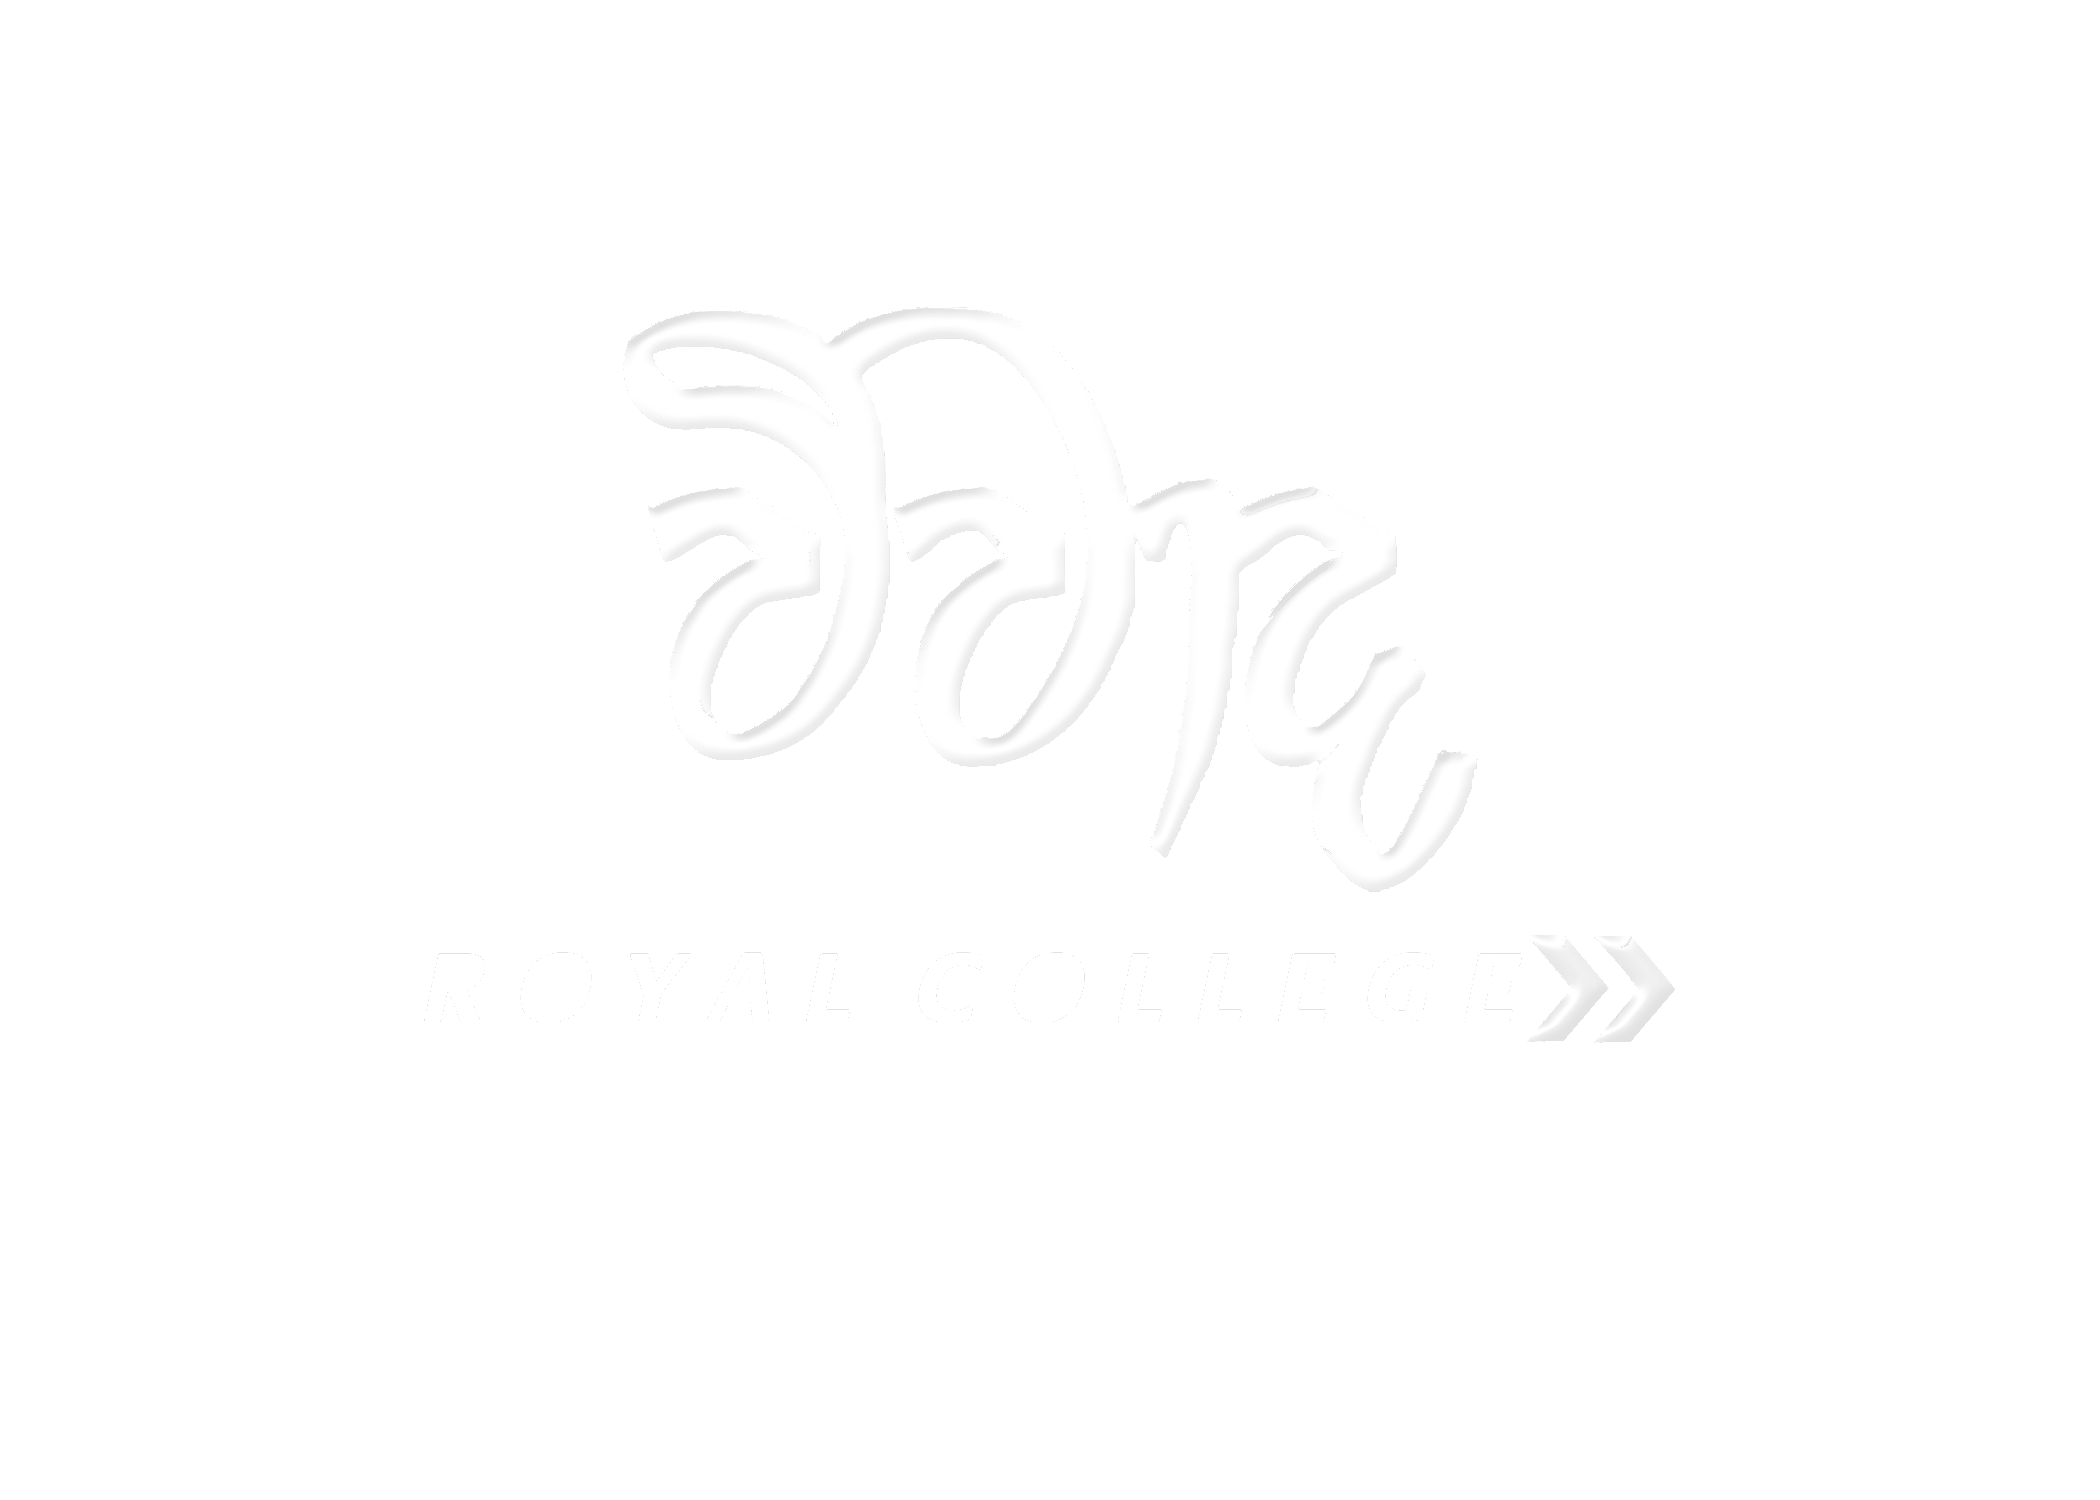 Sinhala Oratory and Debating - The Royal College